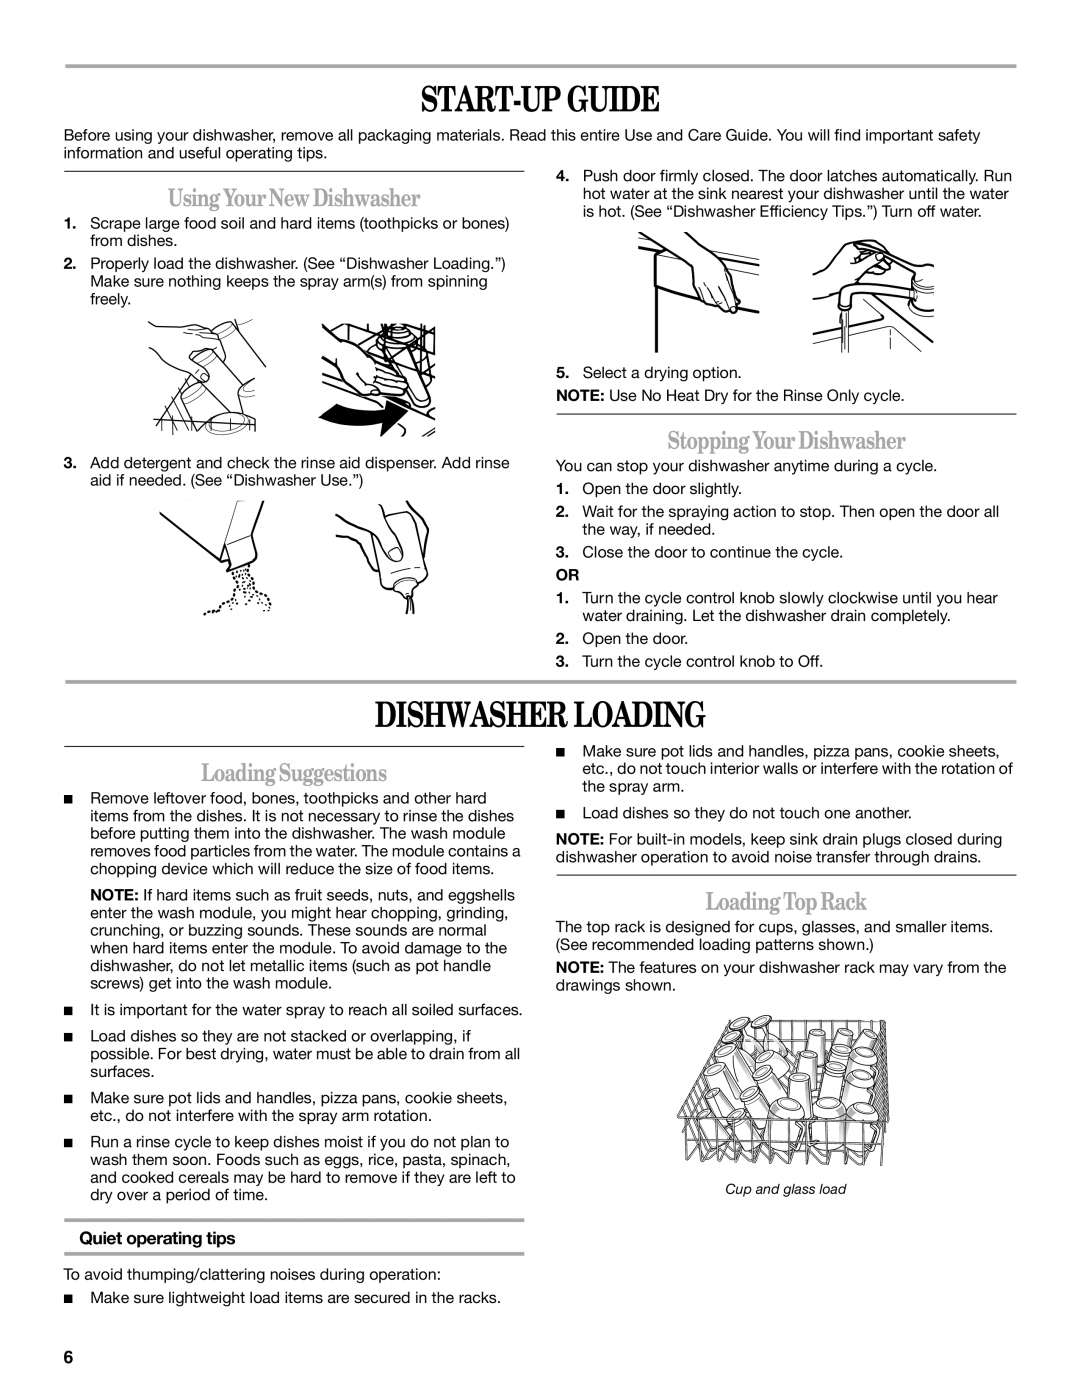 Whirlpool ISD4700 manual Start-Up Guide, Dishwasher Loading, Using Your New Dishwasher, Stopping Your Dishwasher 